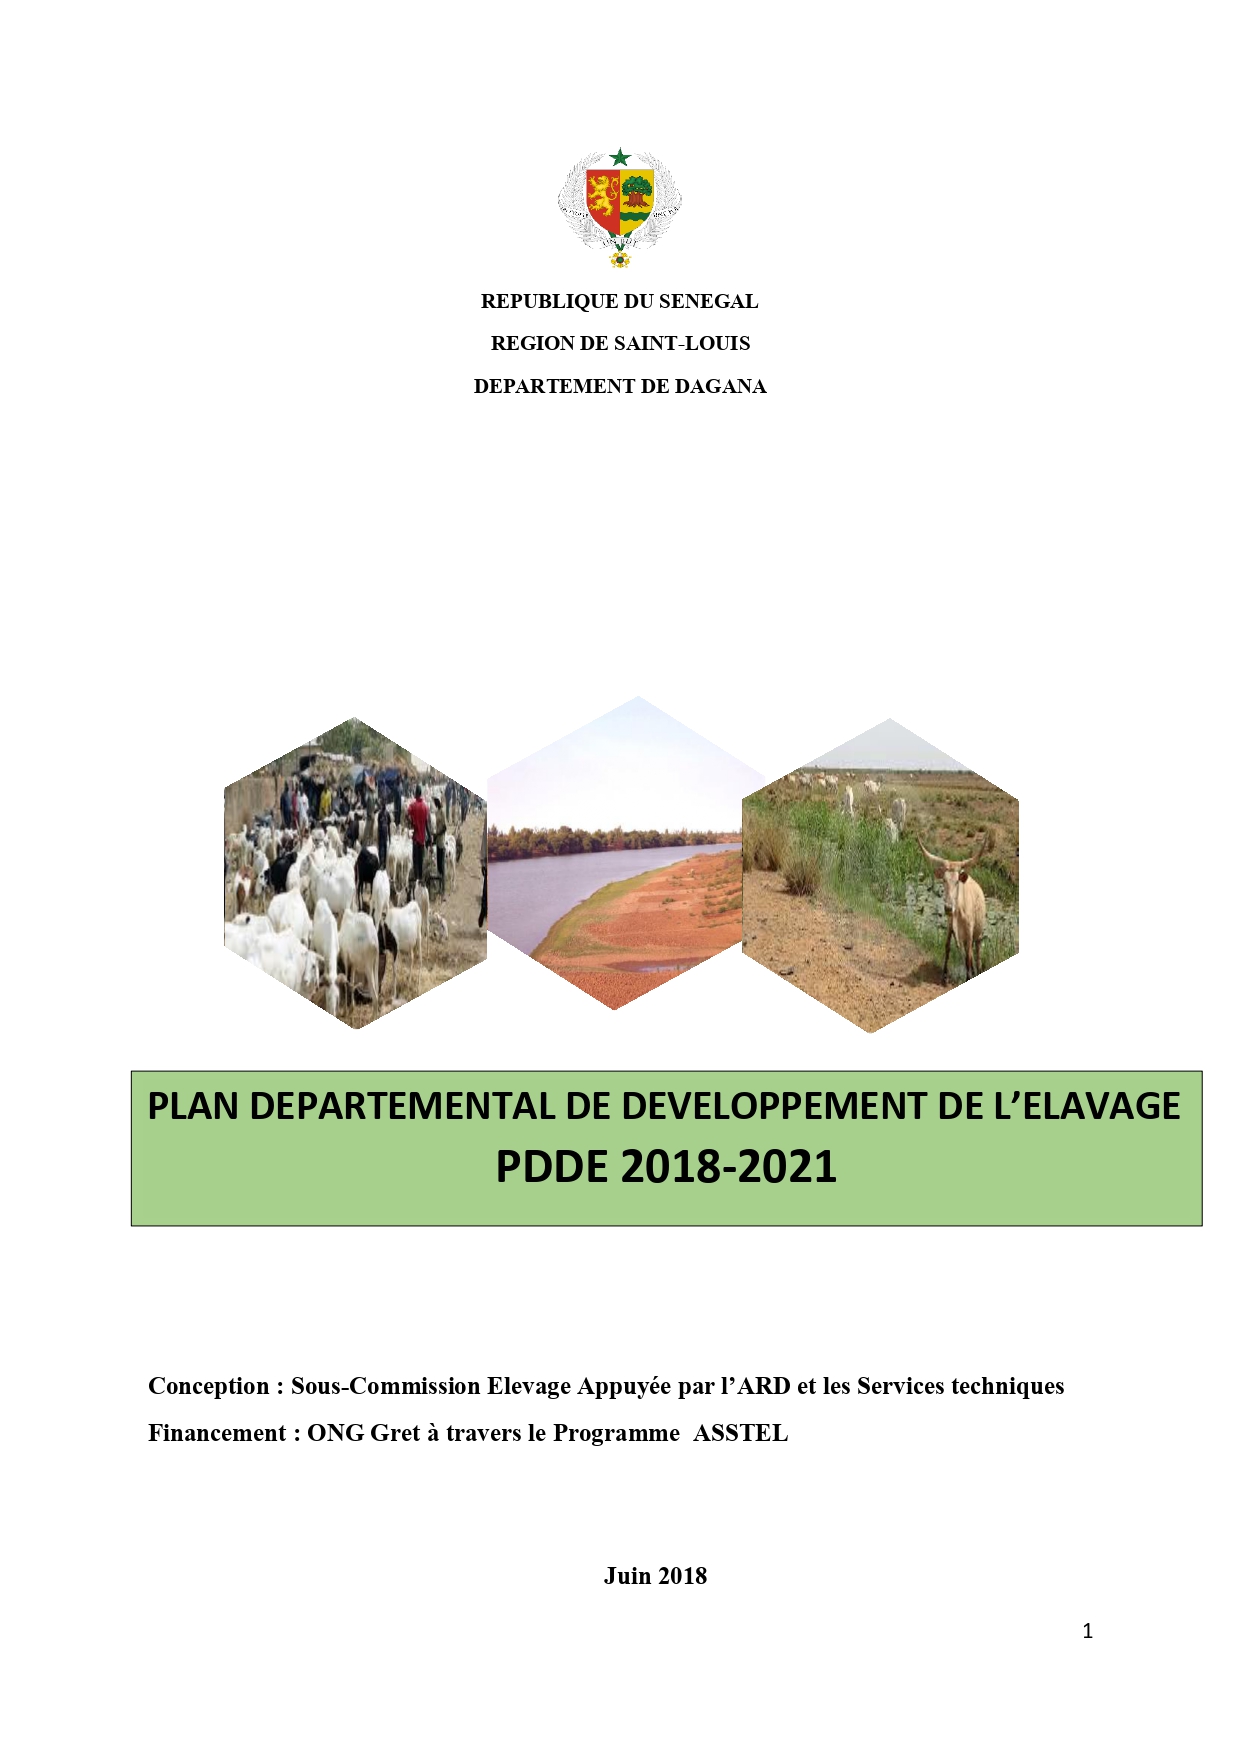  Plan departemental de developpement de l’elavage 2018-2021